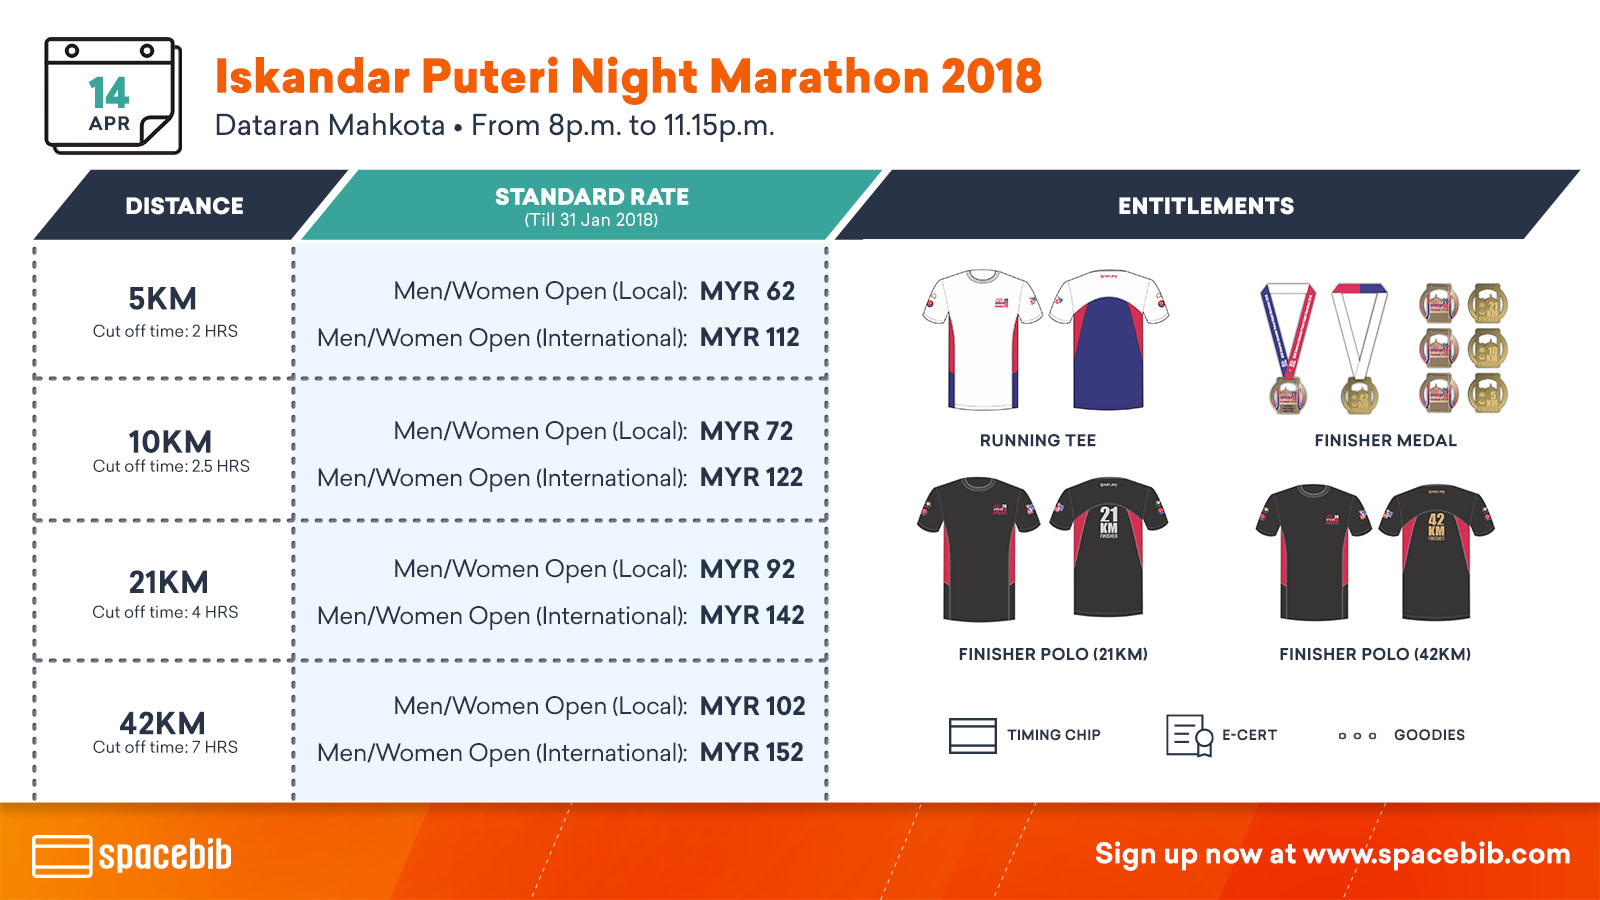 Iskandar Puteri Night Marathon 2018: Make Your Own History on 14th April